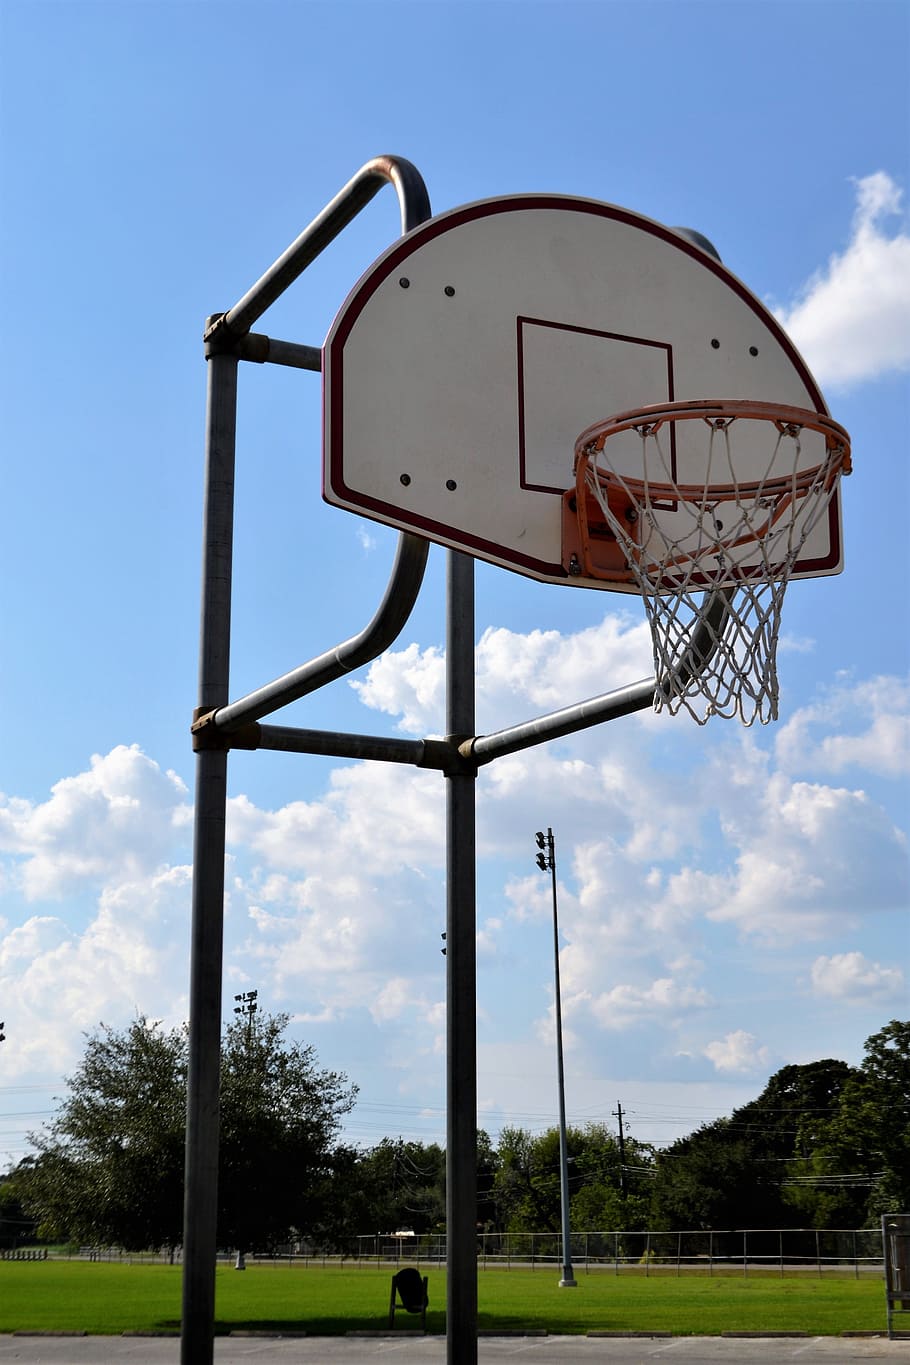 cancha de baloncesto al aire libre, houston, texas, tablero, baloncesto, borde, red, cancha al aire libre, exterior, parque